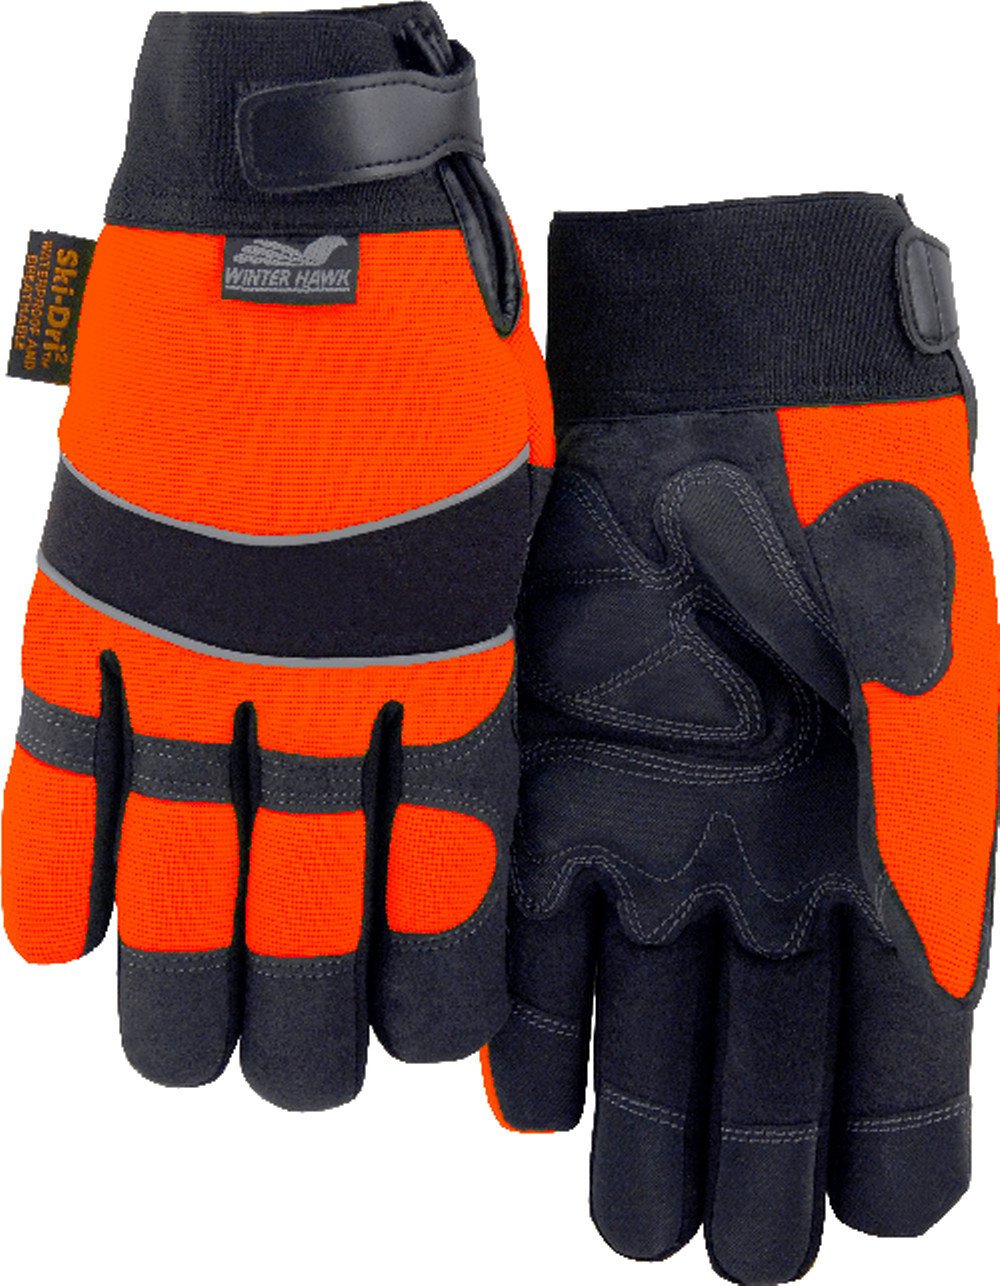 Majestic Hi-Vis Armor Skin Glove - Work World - Workwear, Work Boots, Safety Gear